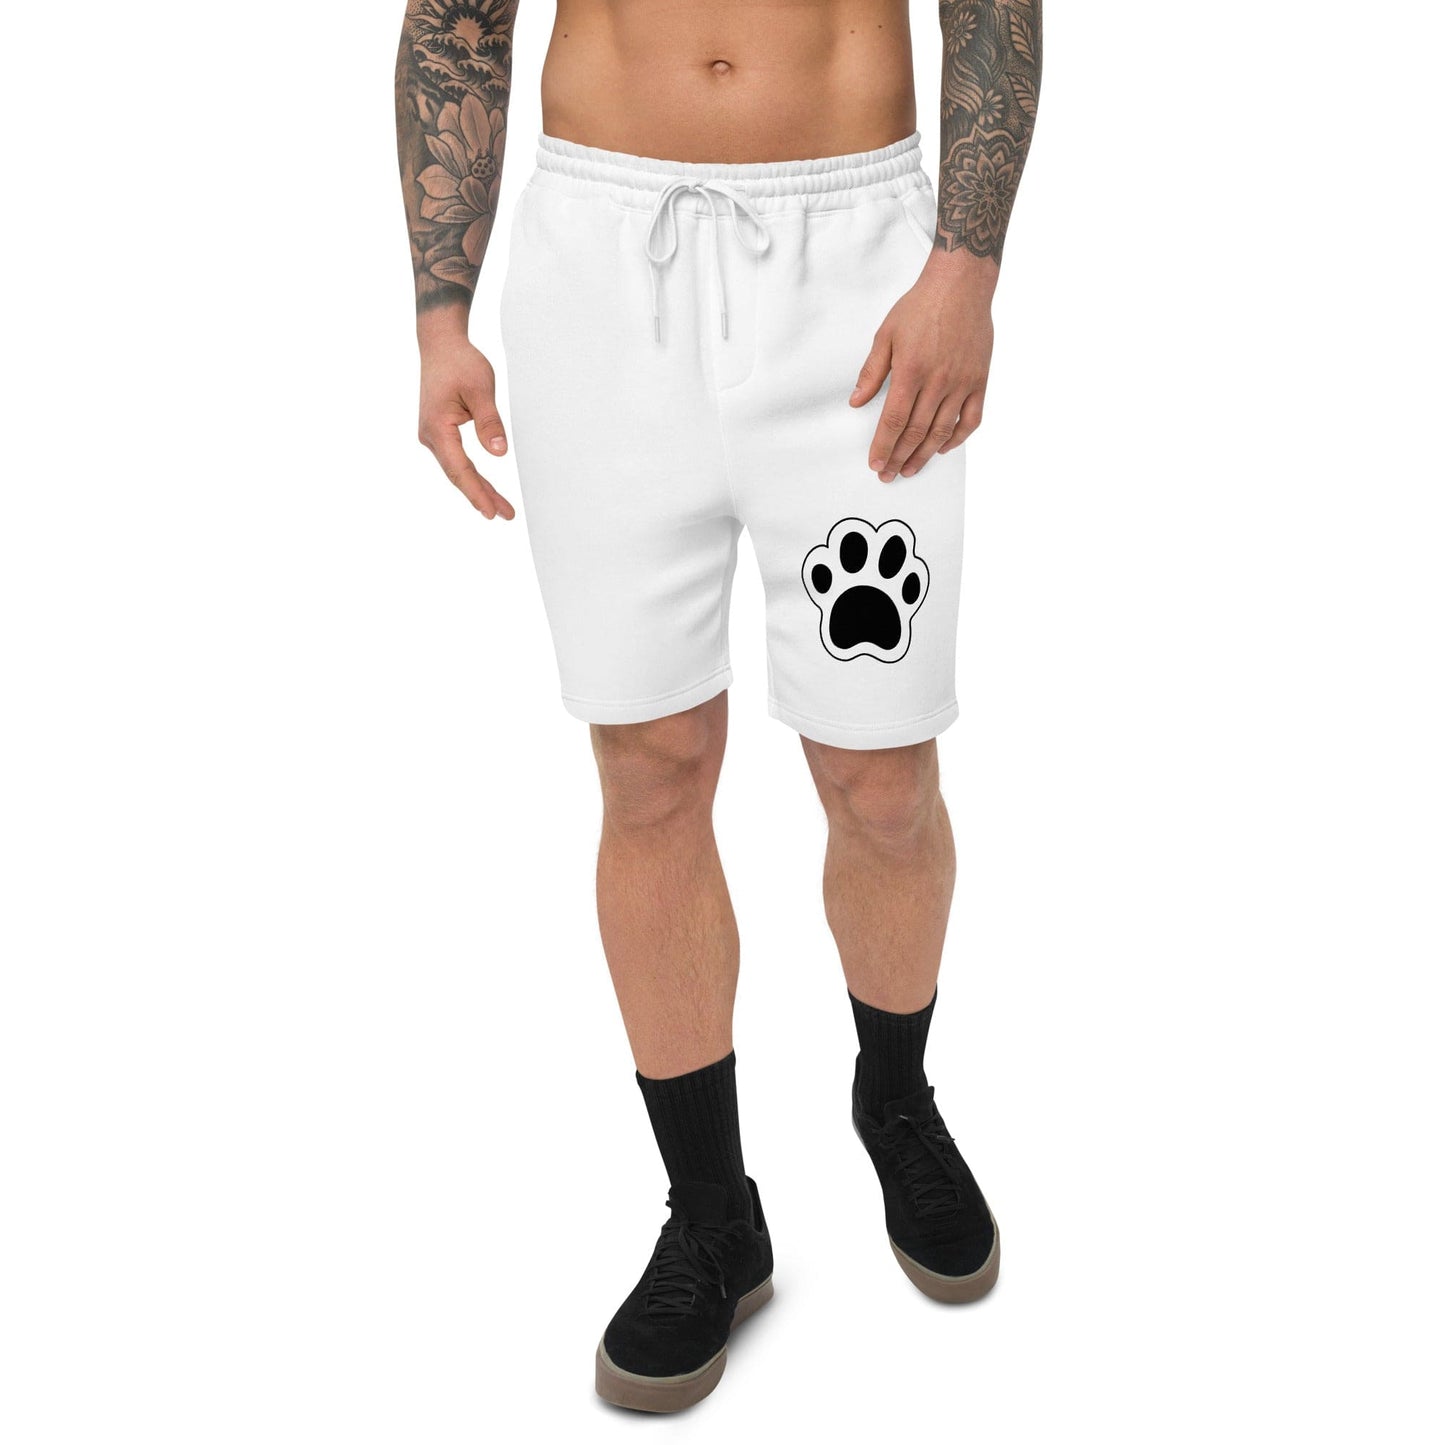 mens-fleece-shorts-white-with-paw-print